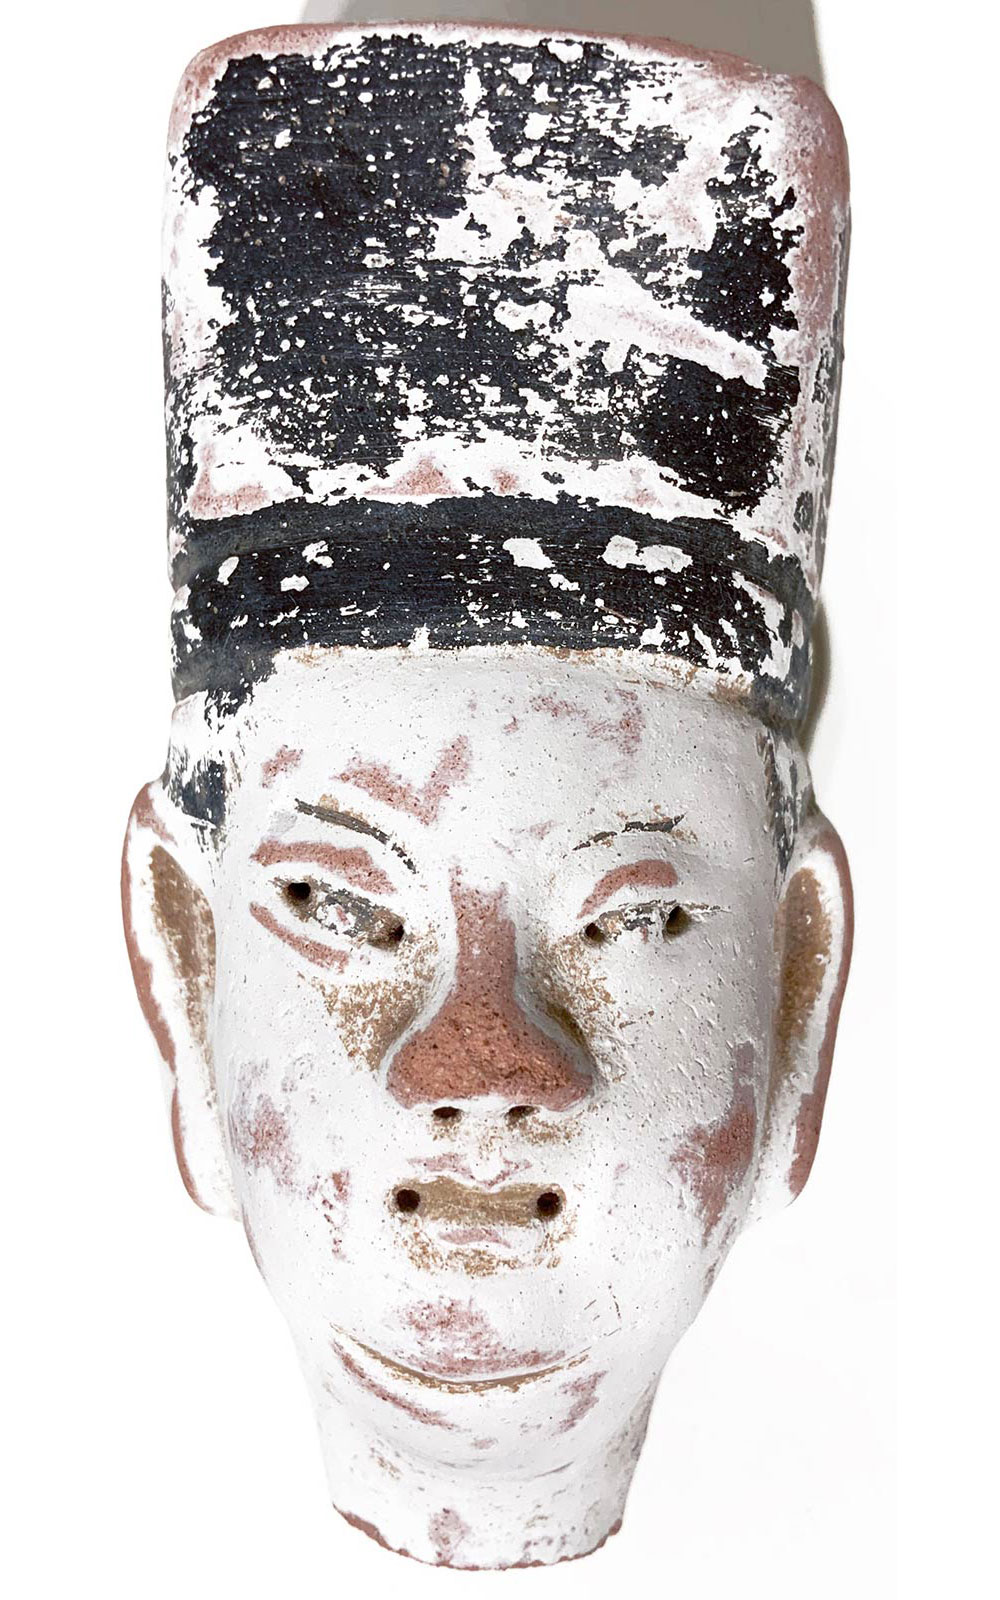 Painted terracotta Head, China, XVII Sec. H 9 cm